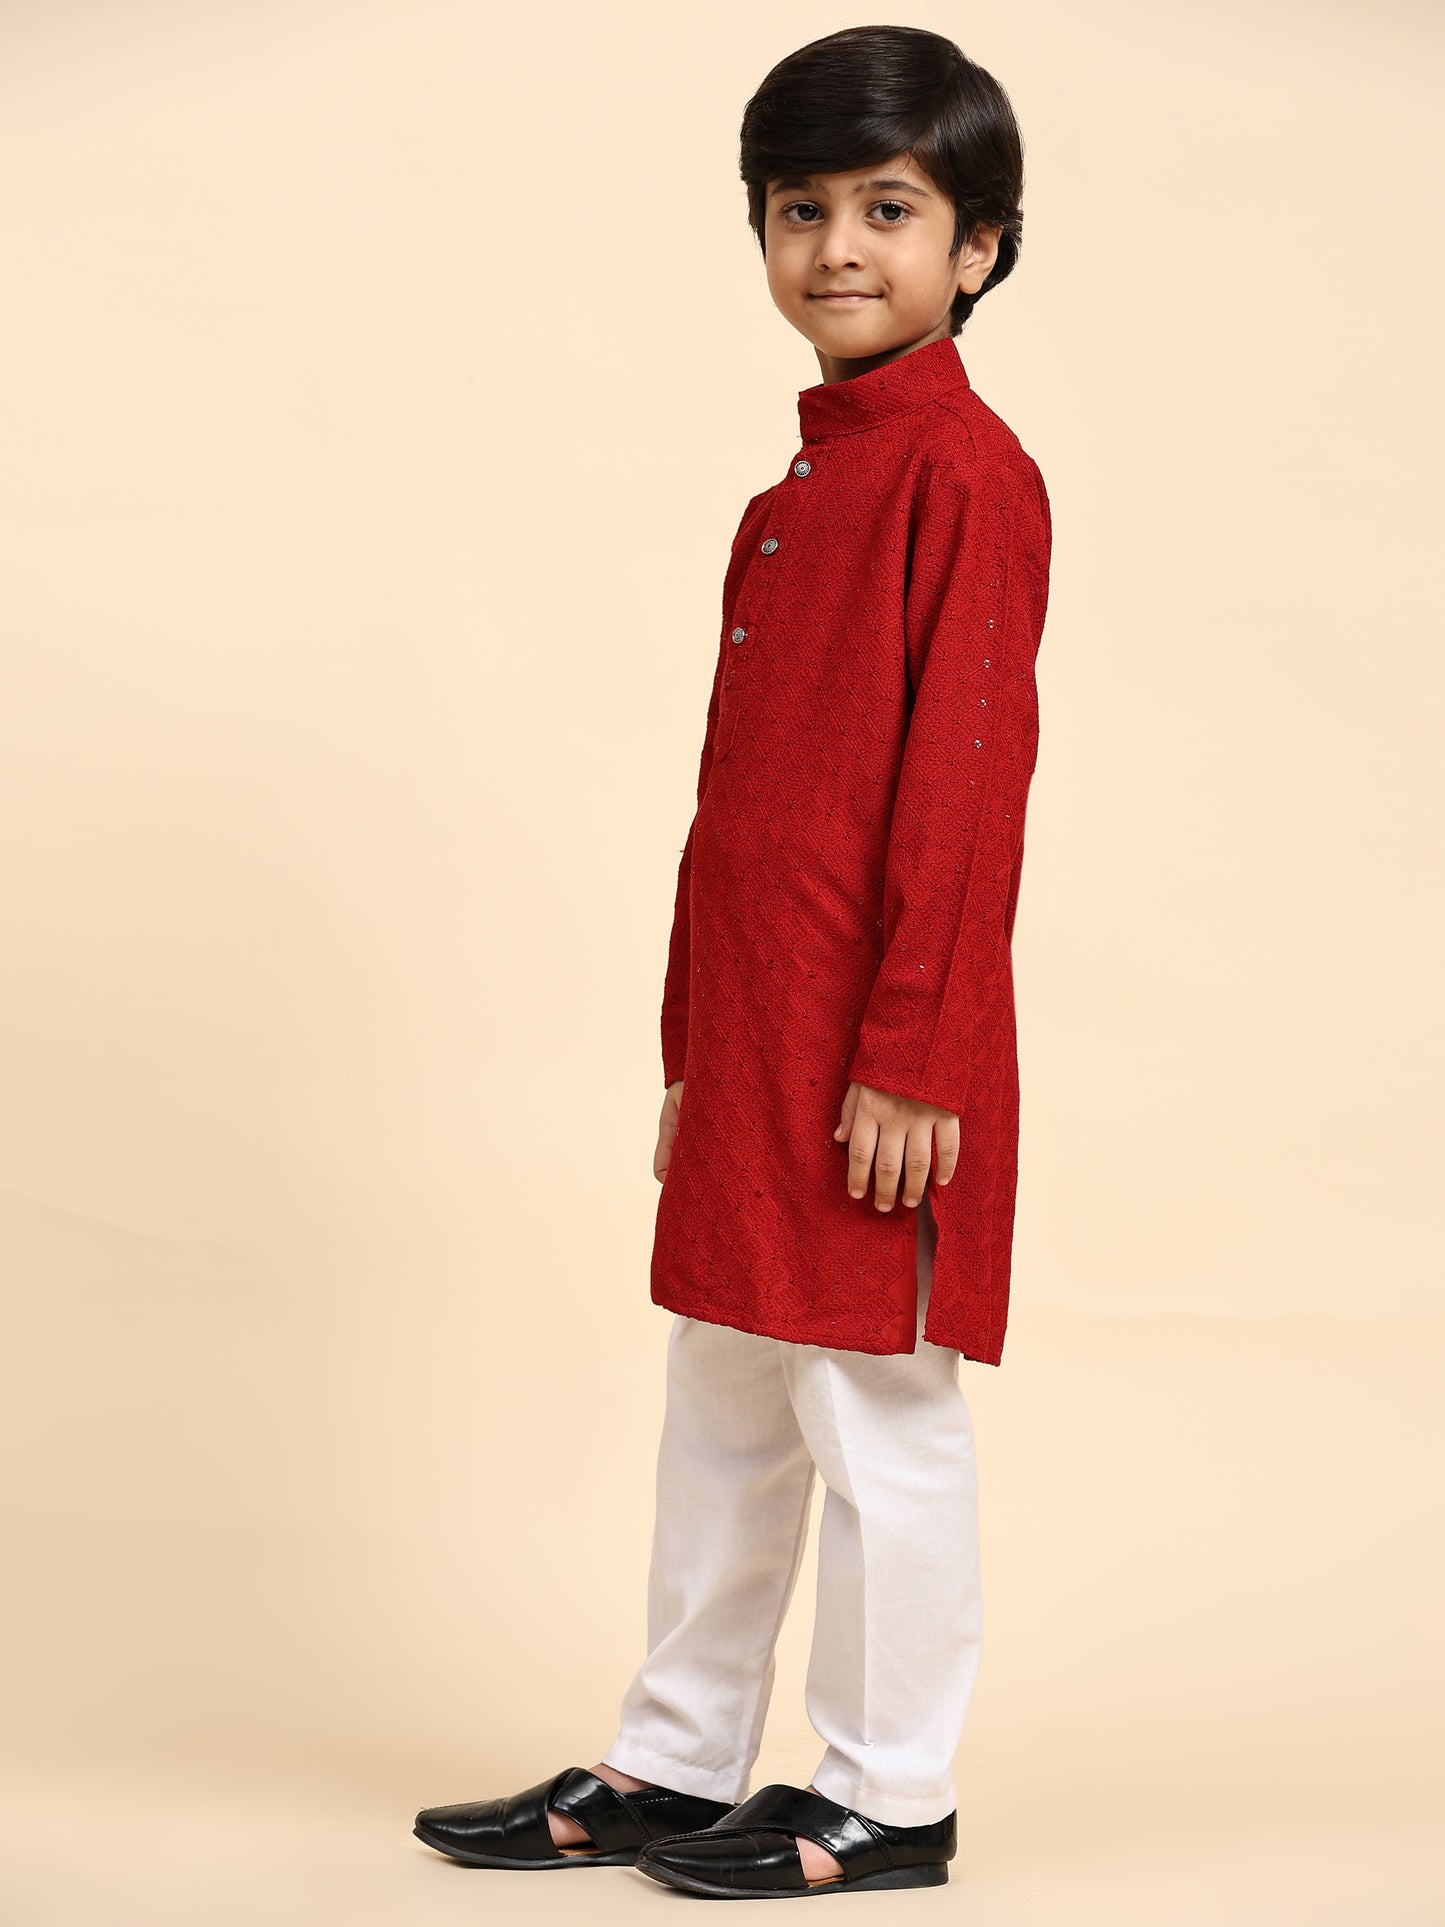 Pro-Ethic Style Developer Boys Cotton Kurta Pajama for Kid's Ethnic Wear | Cotton Kurta Pajama (S-227), Maroon